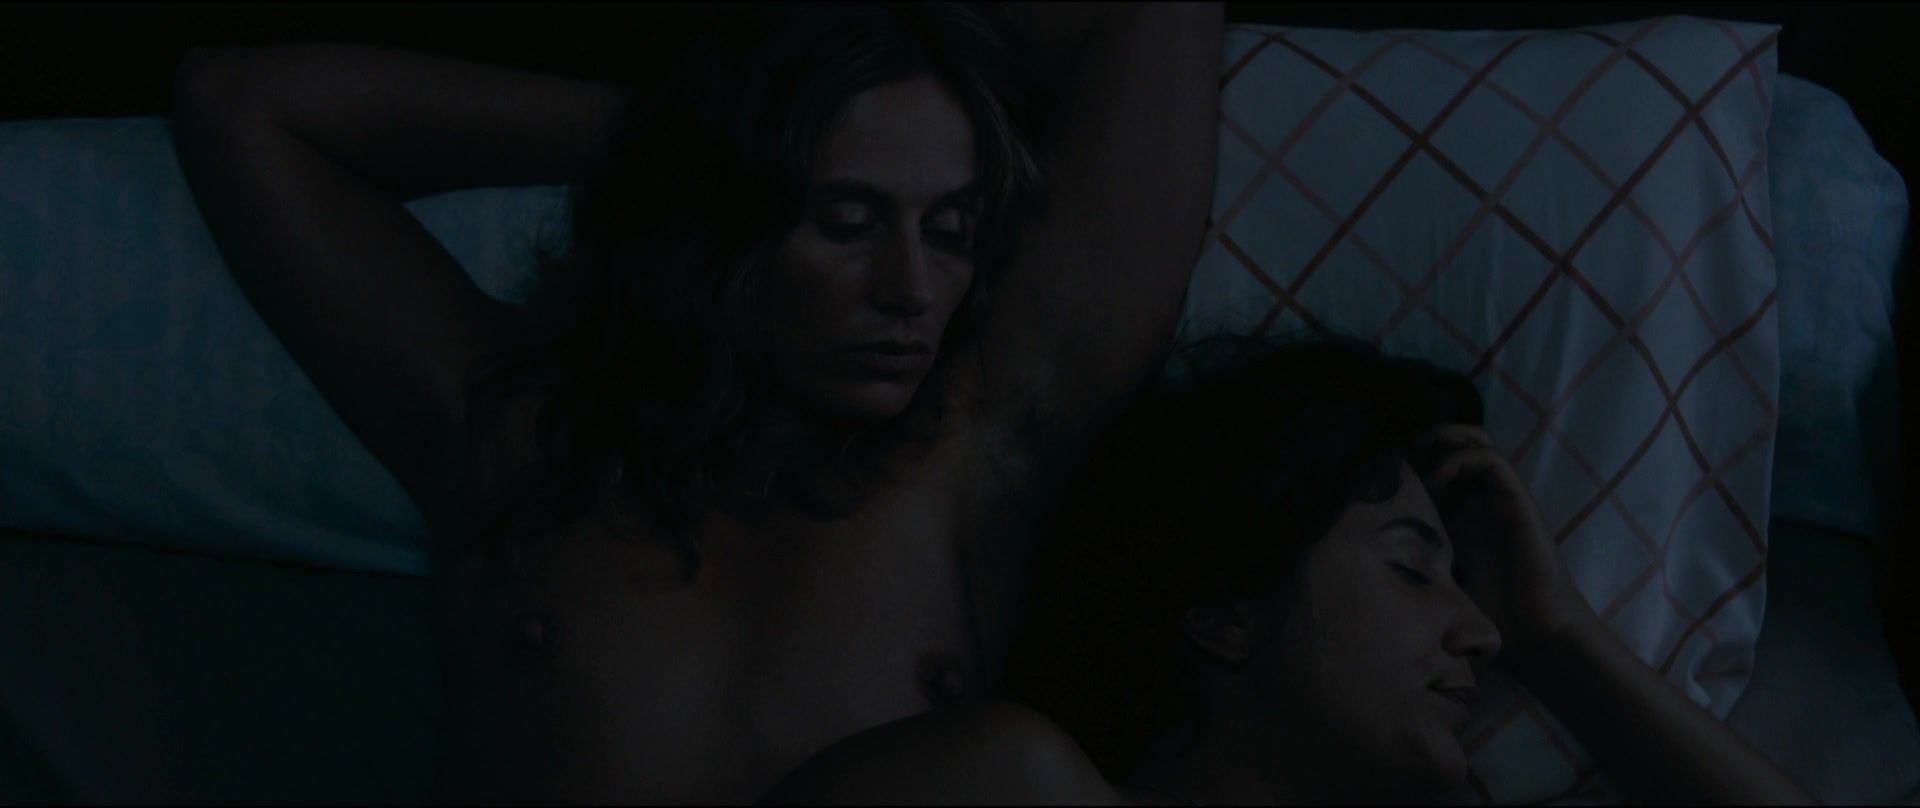 Puta Outdoors Lesbian Sex Video of French erotic film "La belle saison" Sapphic